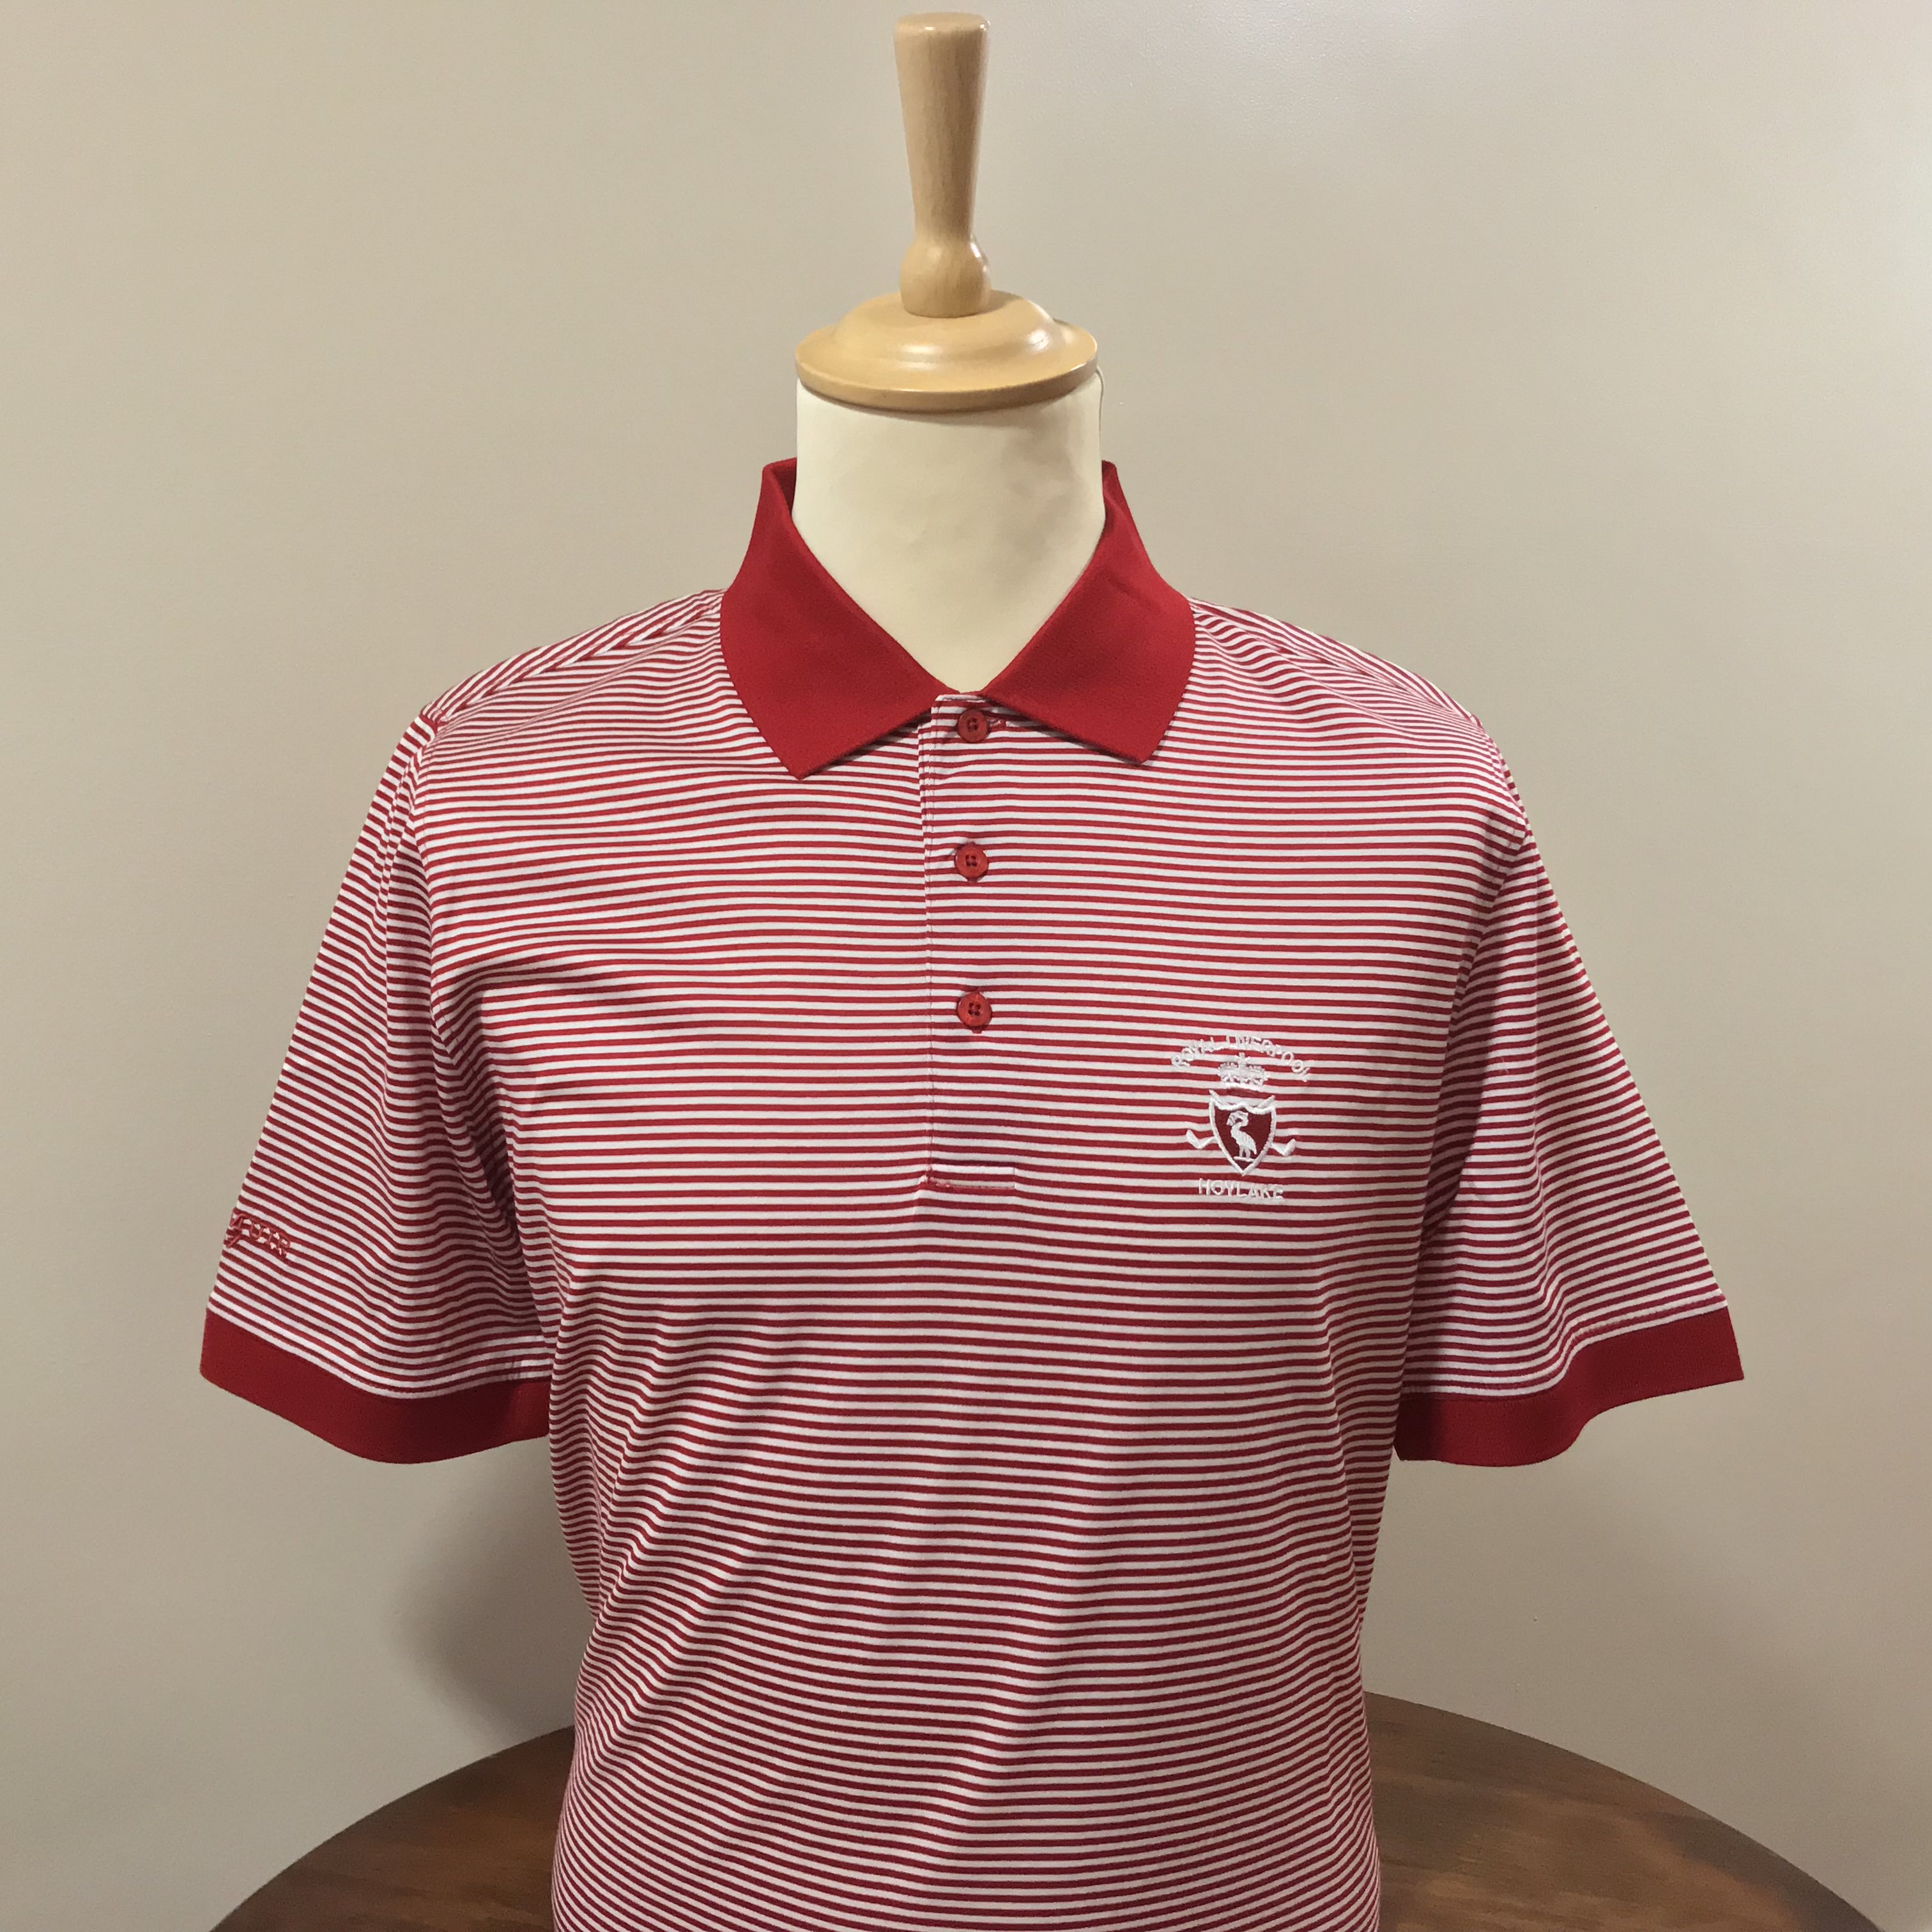 product | Royal Liverpool Golf Club Shop